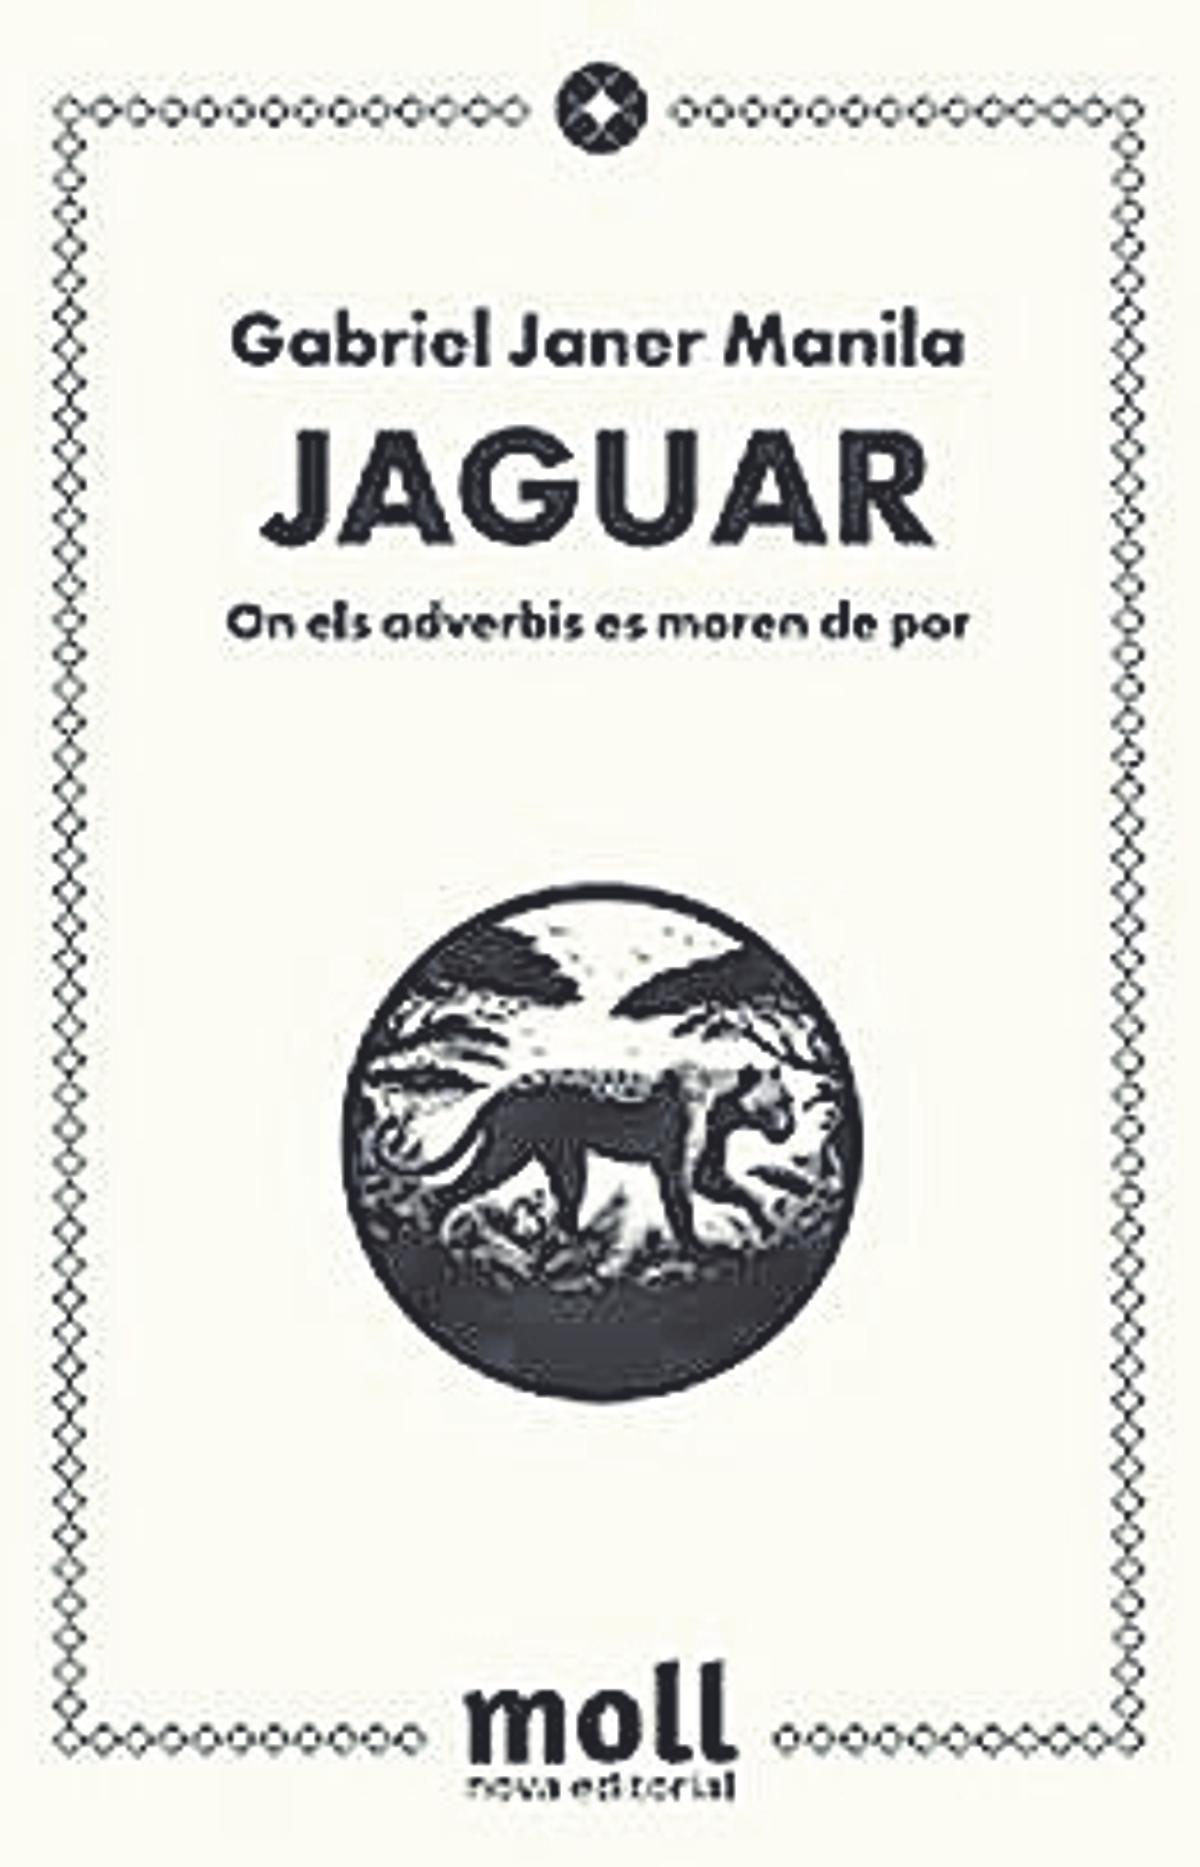 Jaguar, Gabriel Janer Manila